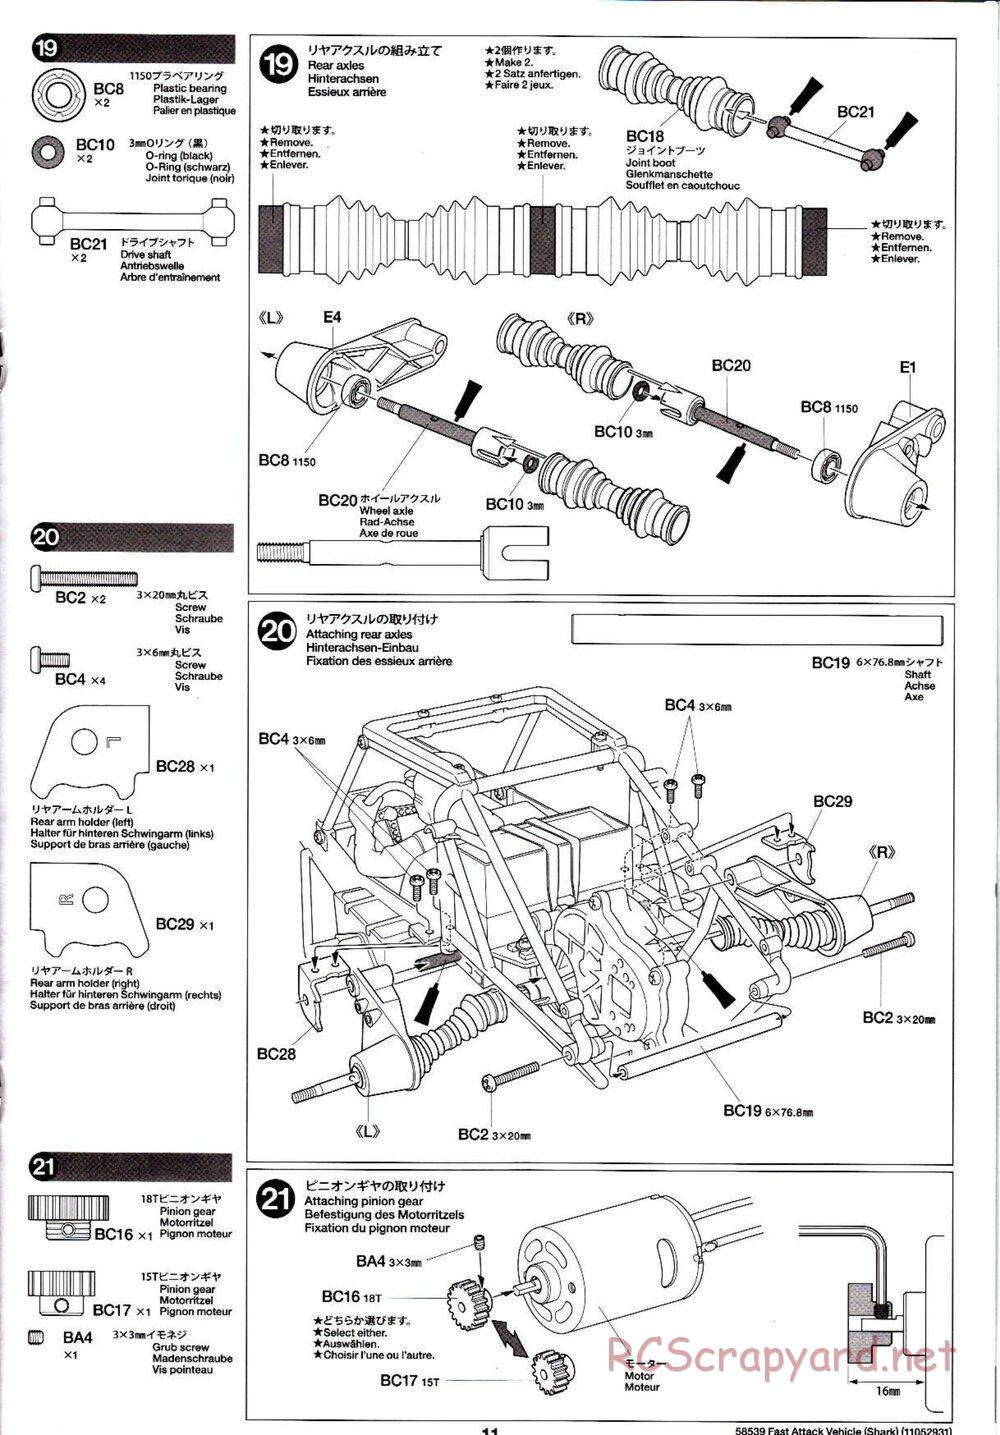 Tamiya - Fast Attack Vehicle w/ Shark Mouth - FAV Chassis - Manual - Page 11